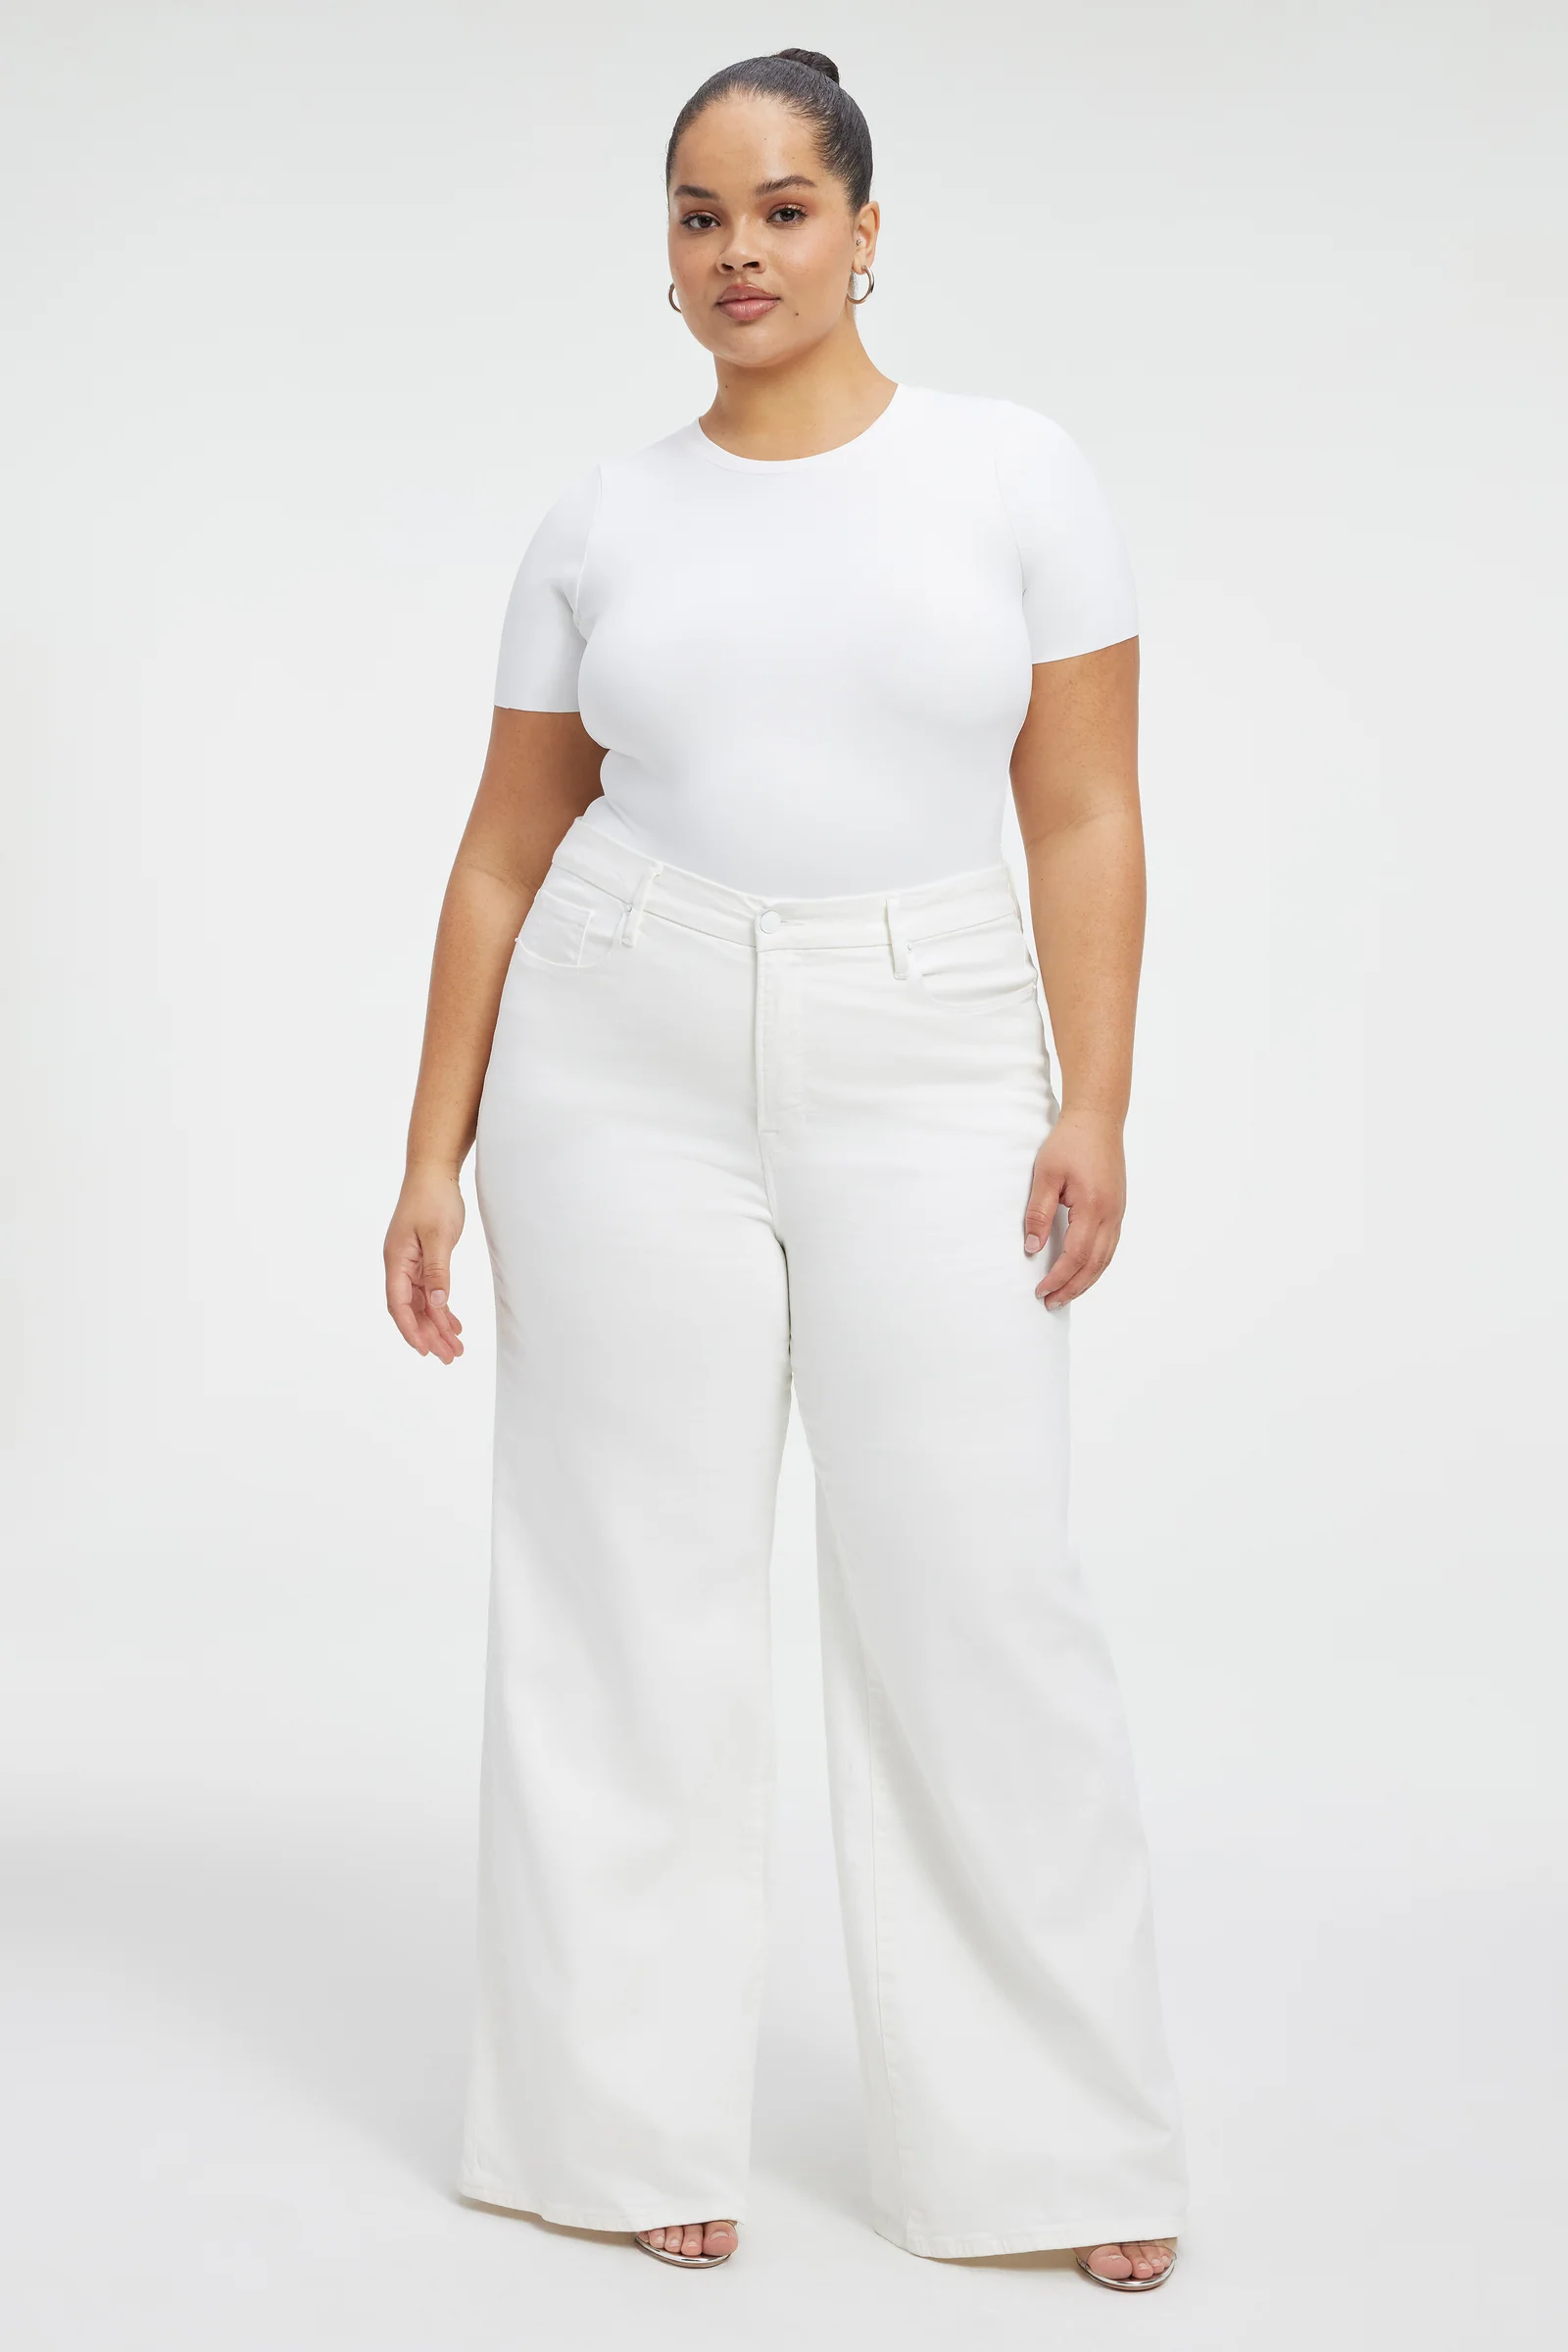 LEVI'S Womens White Jeans Size: 28 - Walmart.com